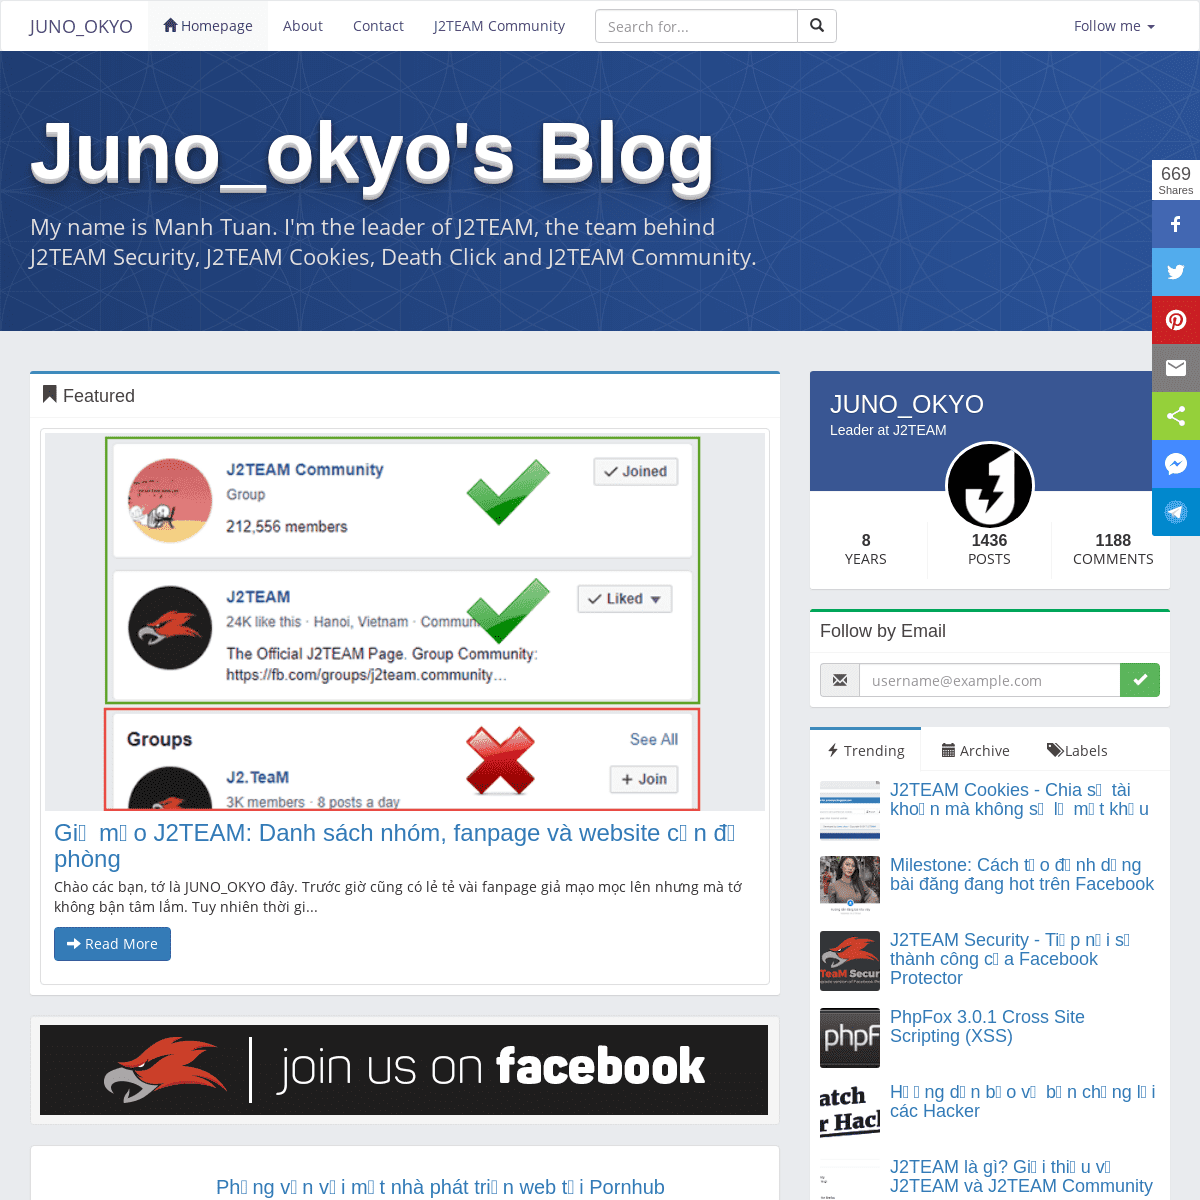 Juno_okyo's Blog